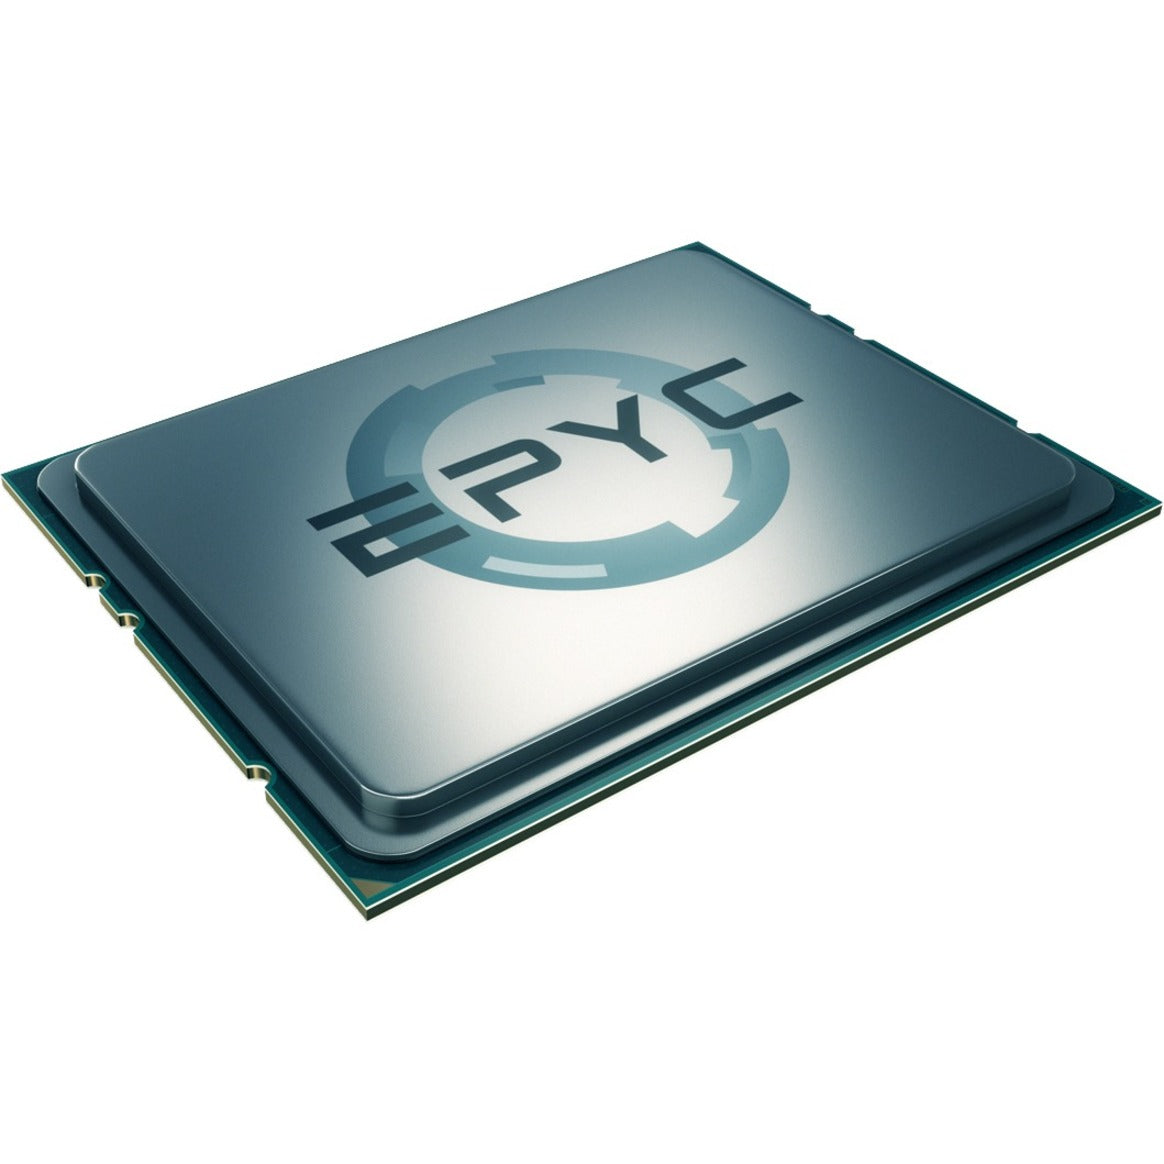 AMD EPYC Dotriaconta-core 7551 2GHz Server Processor [Discontinued]